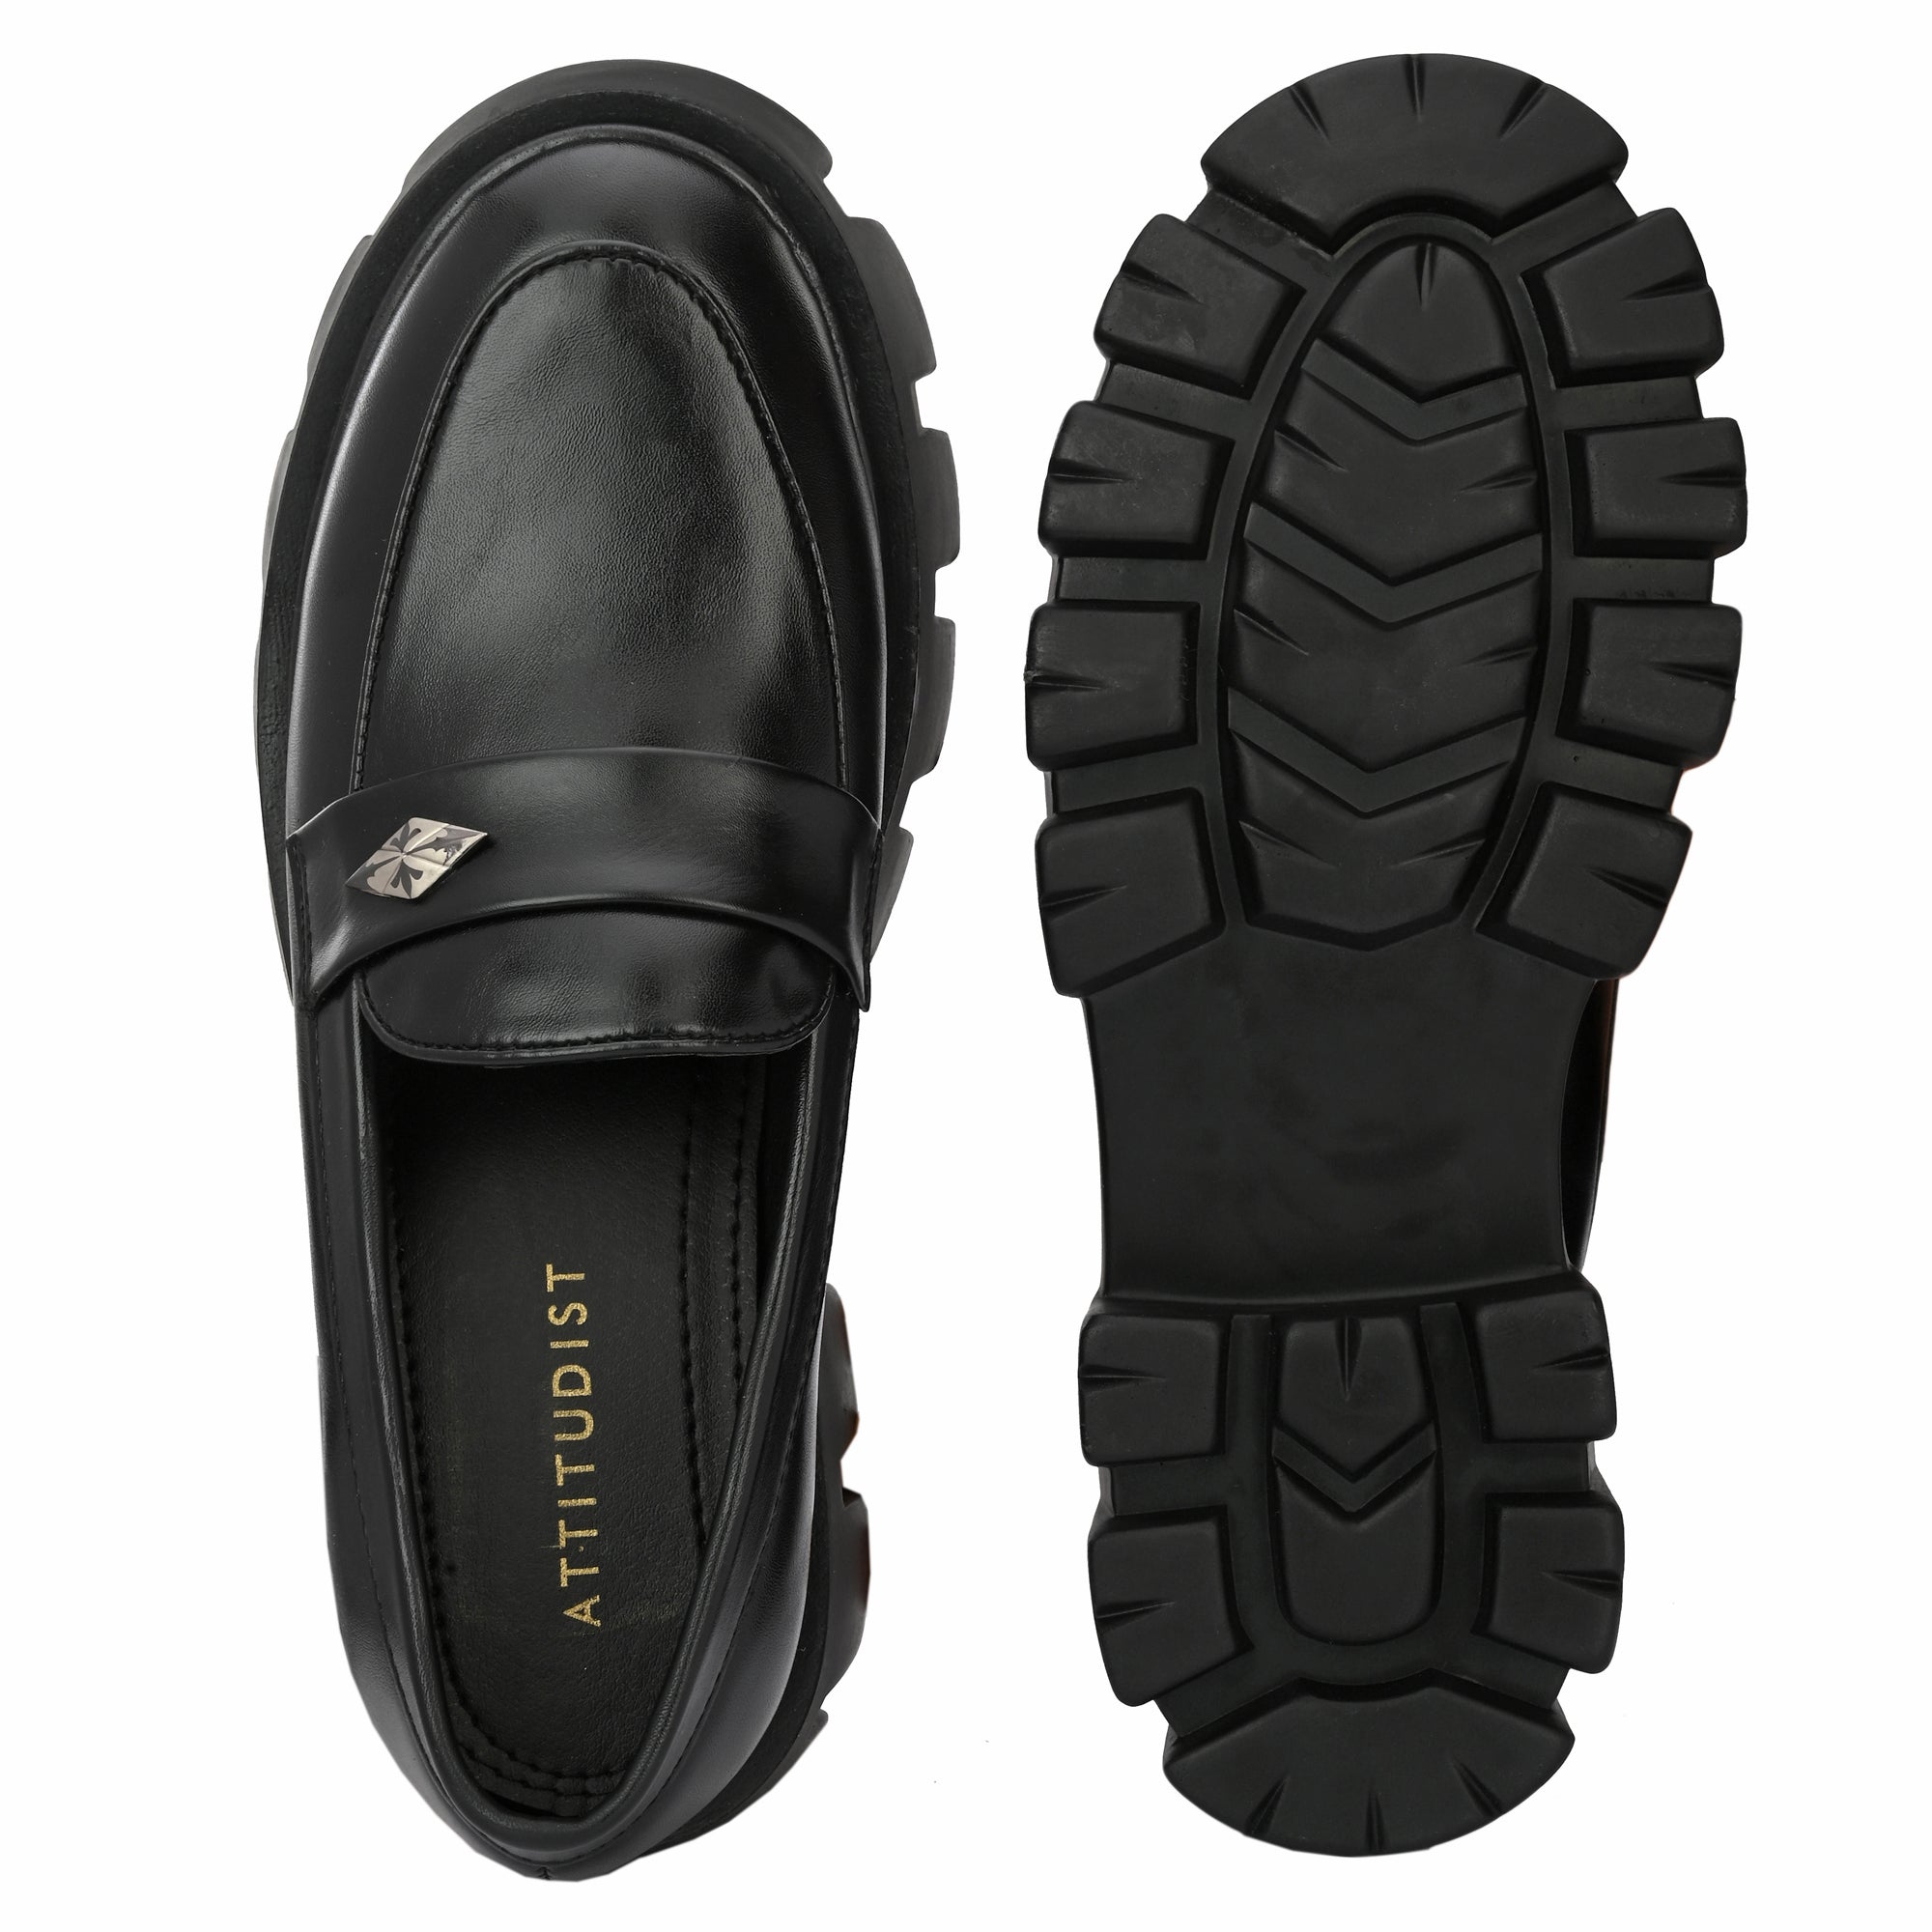 attitudist-black-round-toe-high-heel-penny-loafers-for-men